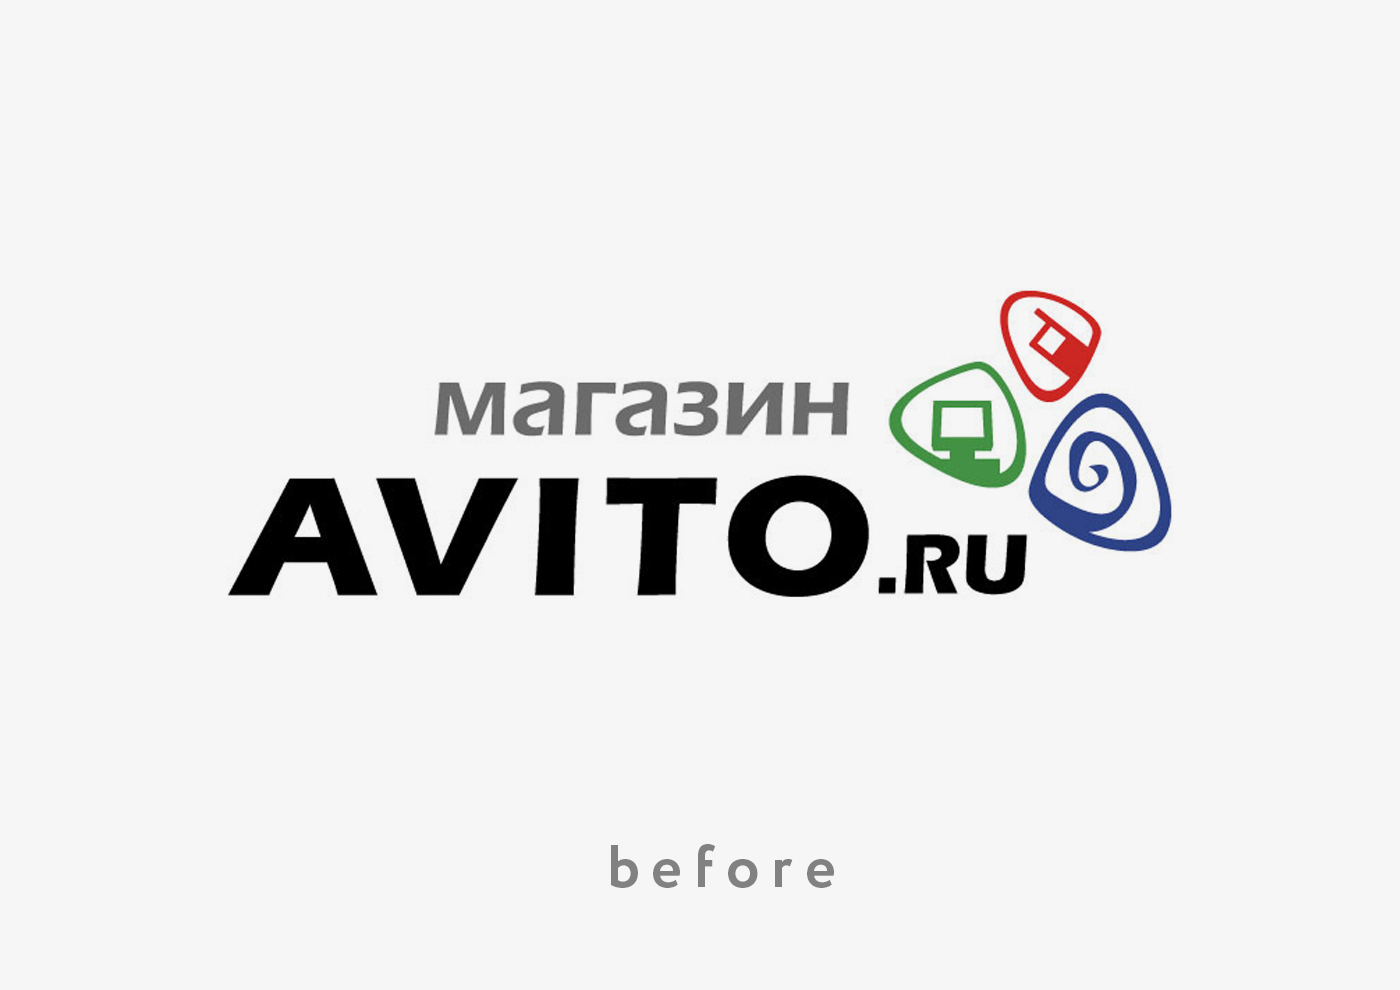 Сайт авито бу. Авито. Авито логотип. Авито.ру Москва. Avito значок.